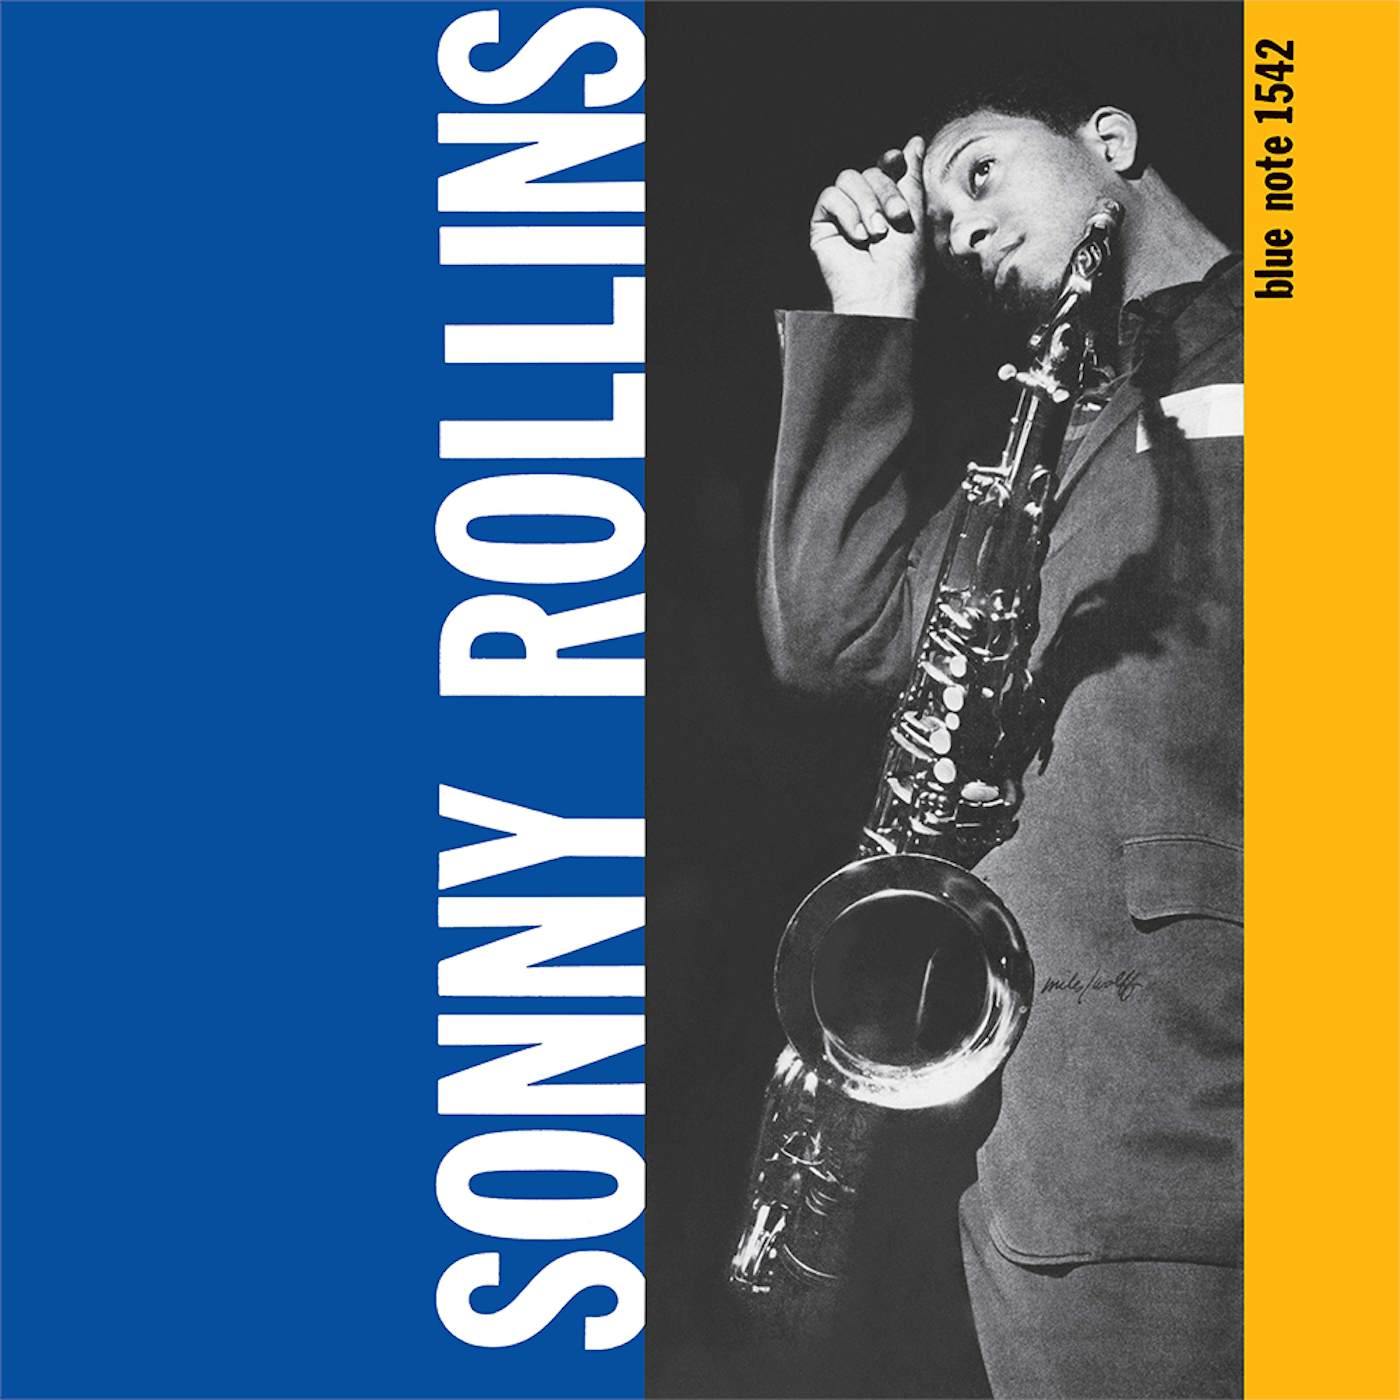 Sonny Rollins - Volume 1 LP (Blue Note Records 75th Anniversary Reissue Series) (Vinyl)